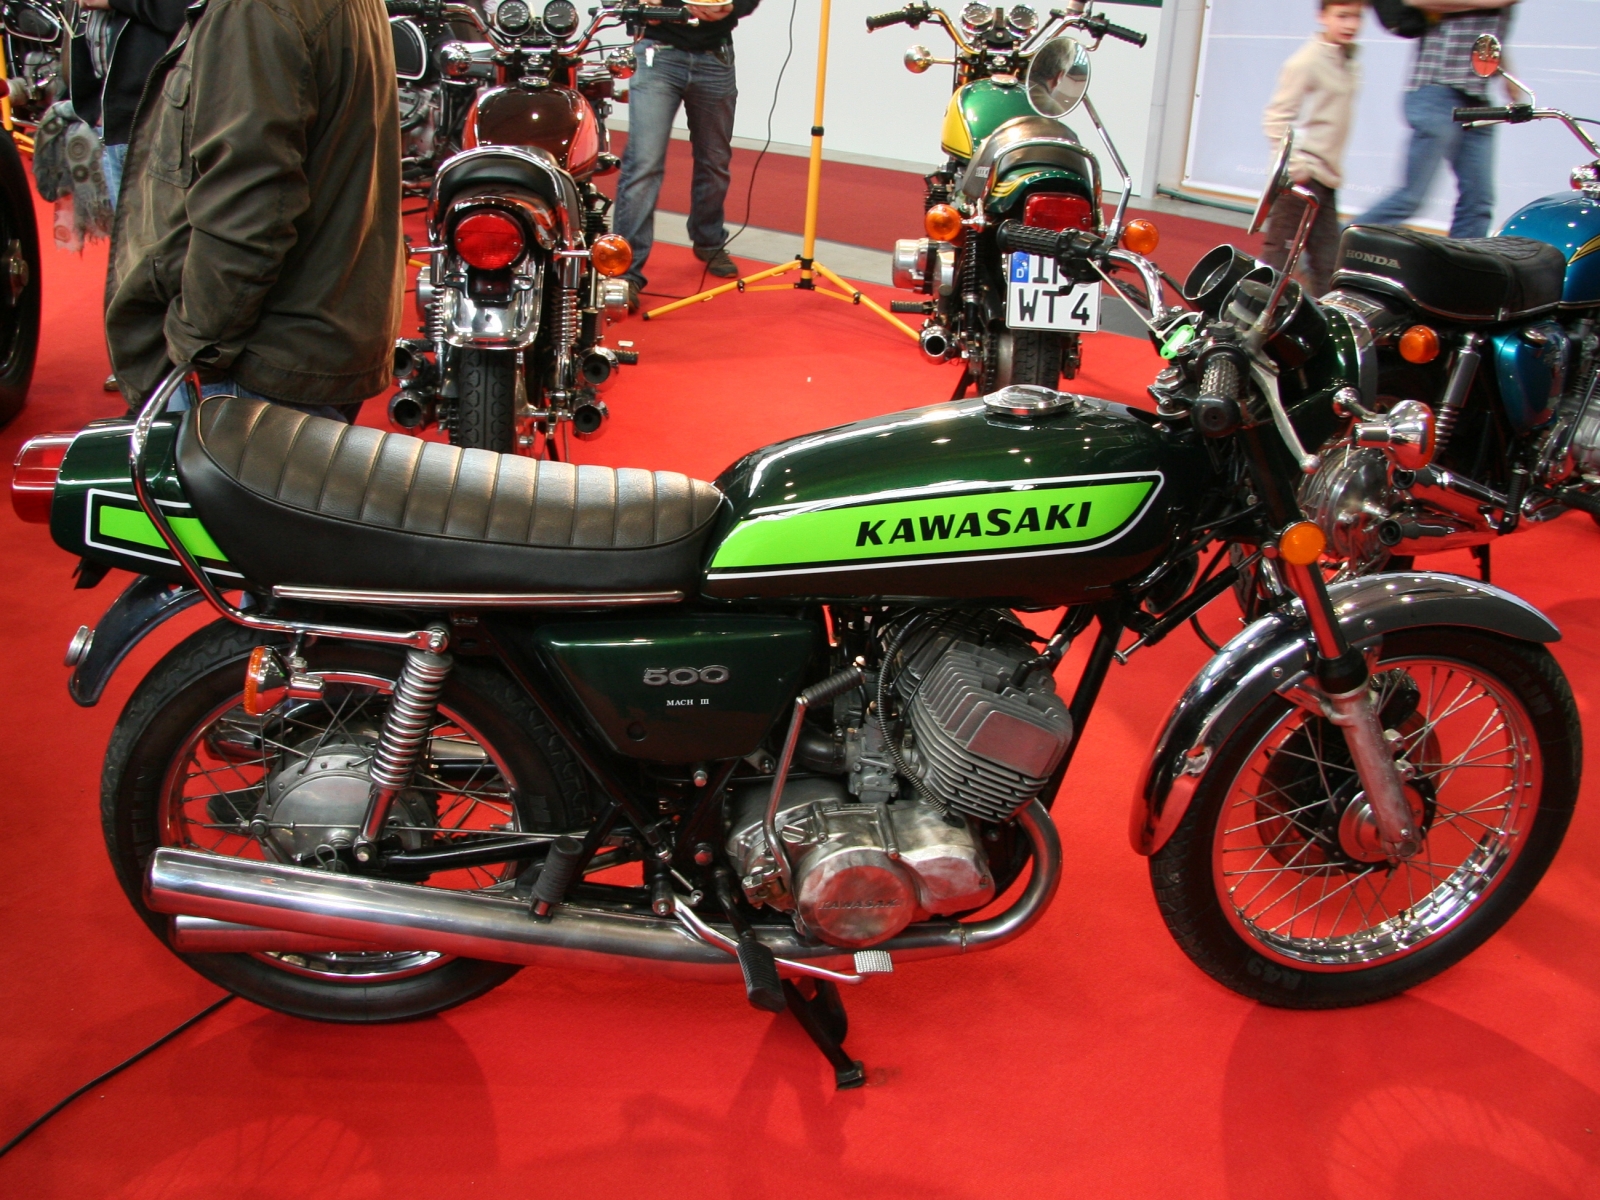 Kawasaki 500 Mach III